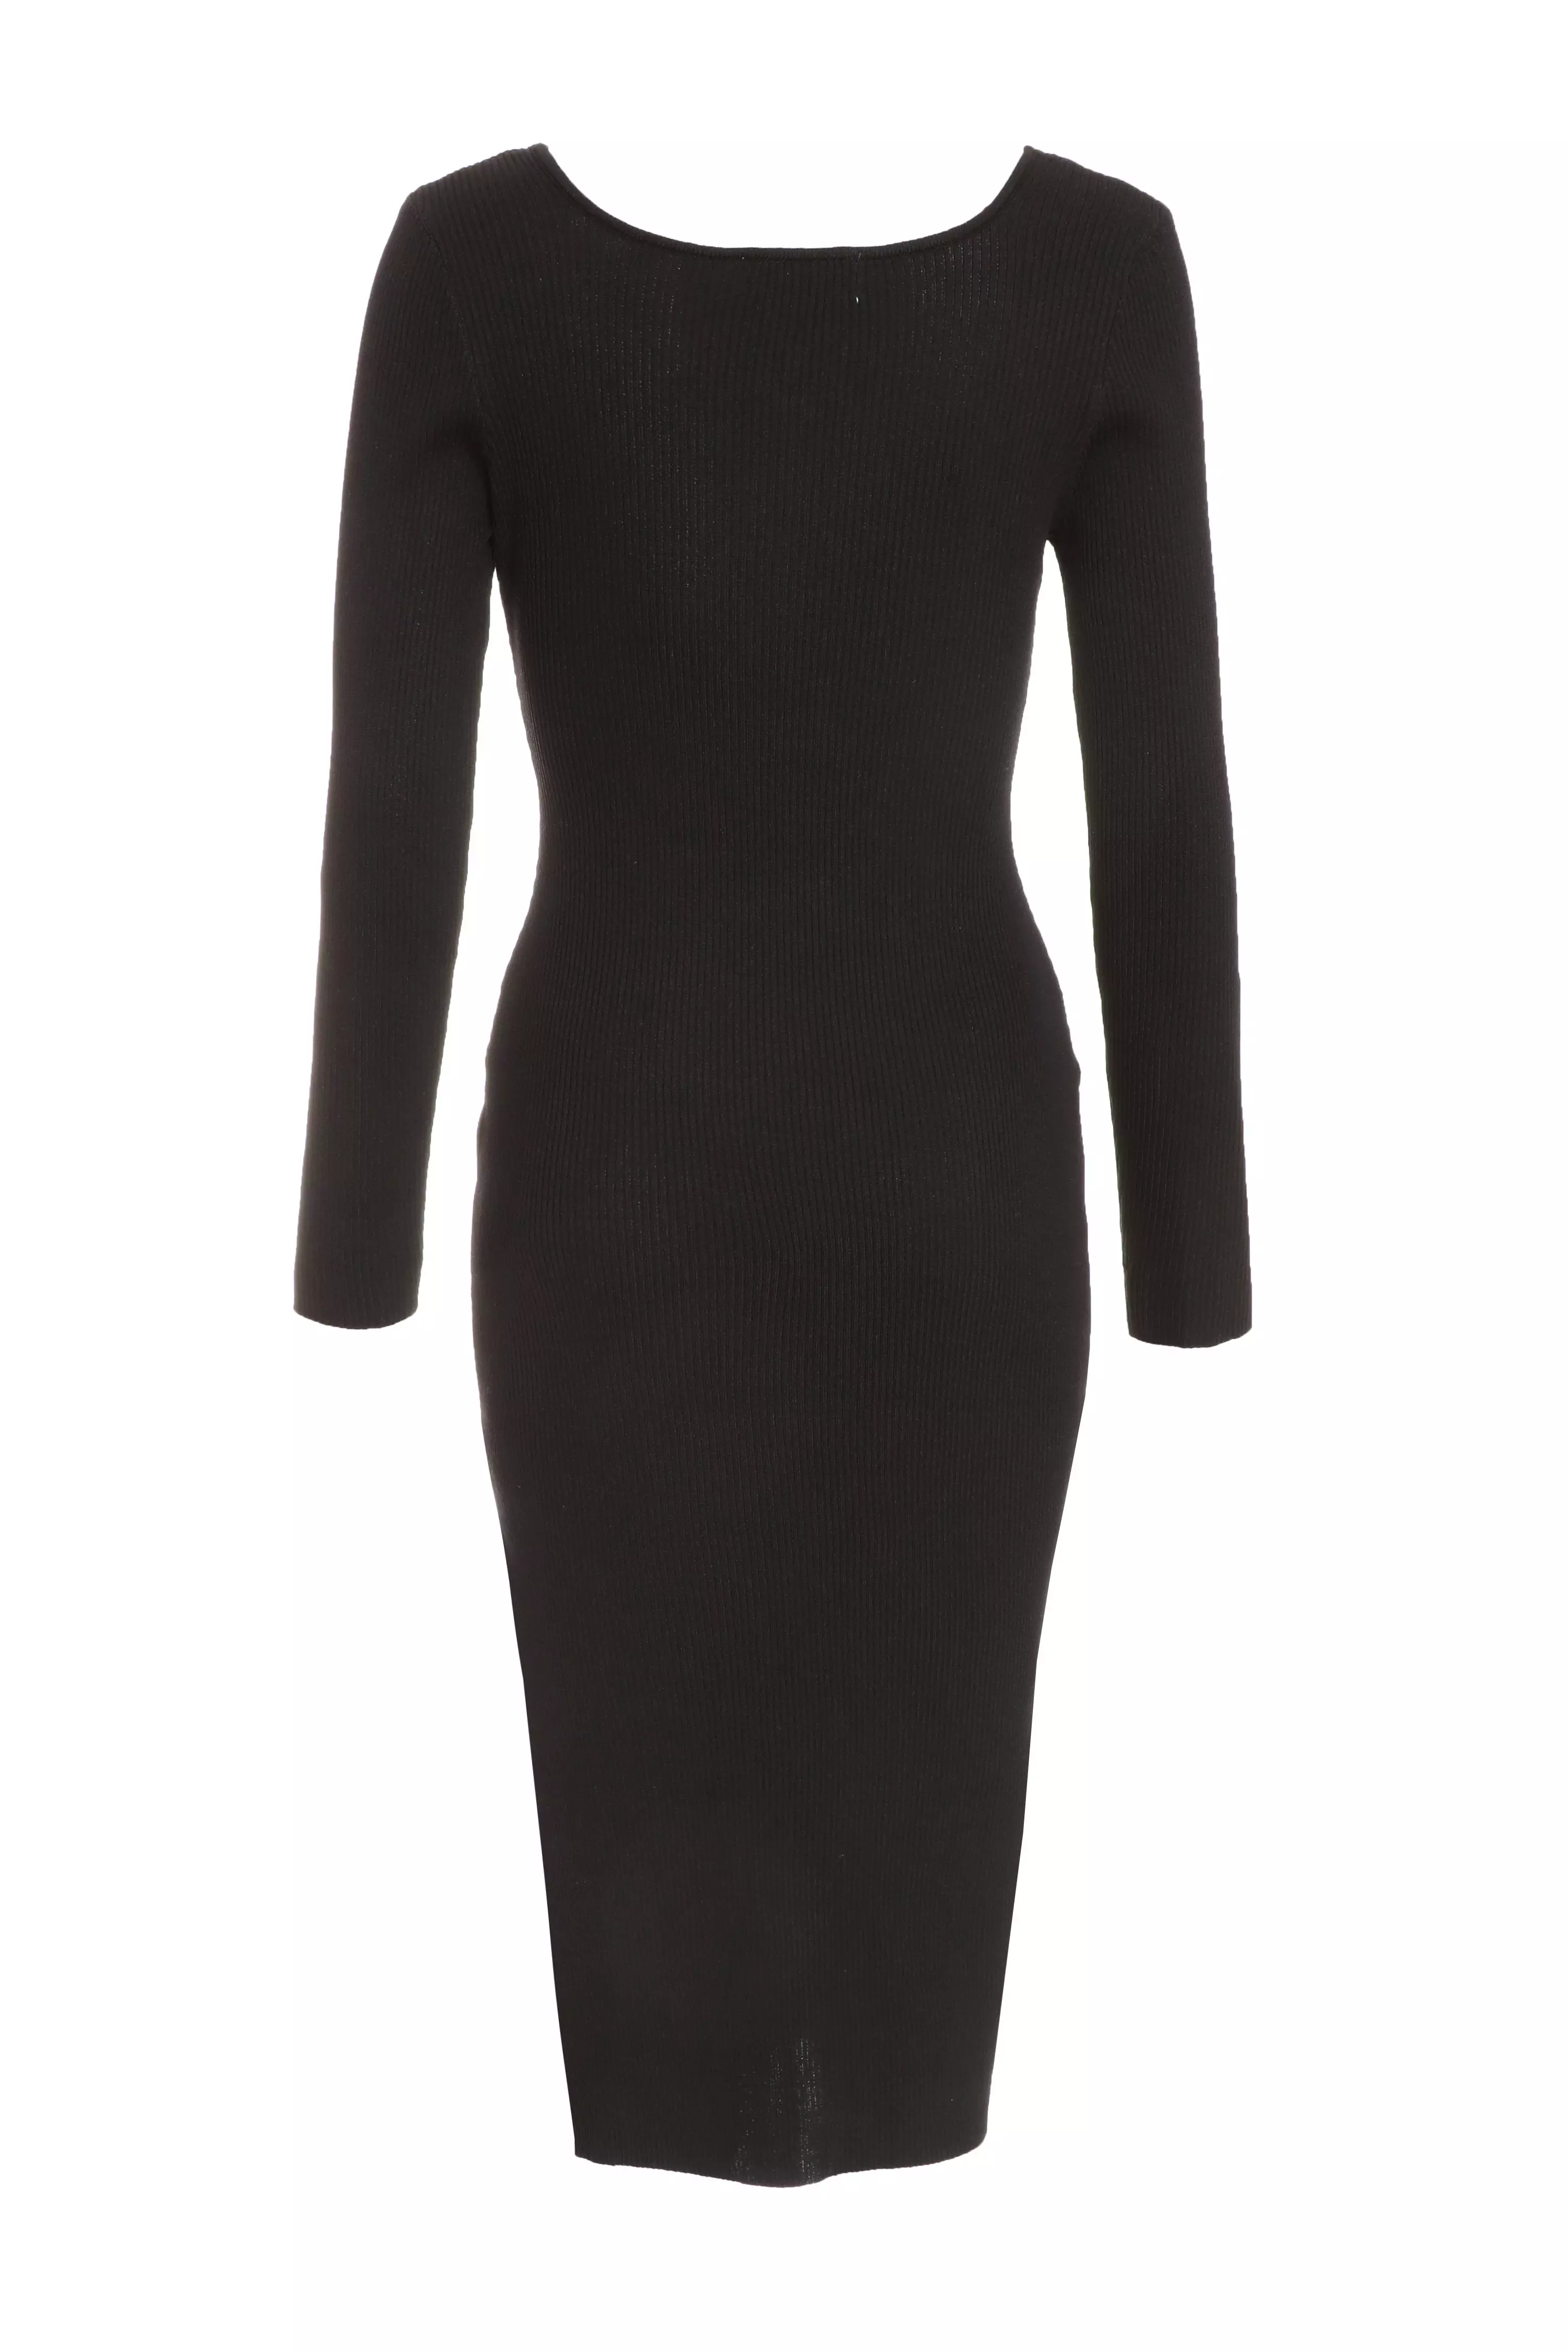 Petite Black Knit Long Sleeve Bodycon Midi Dress